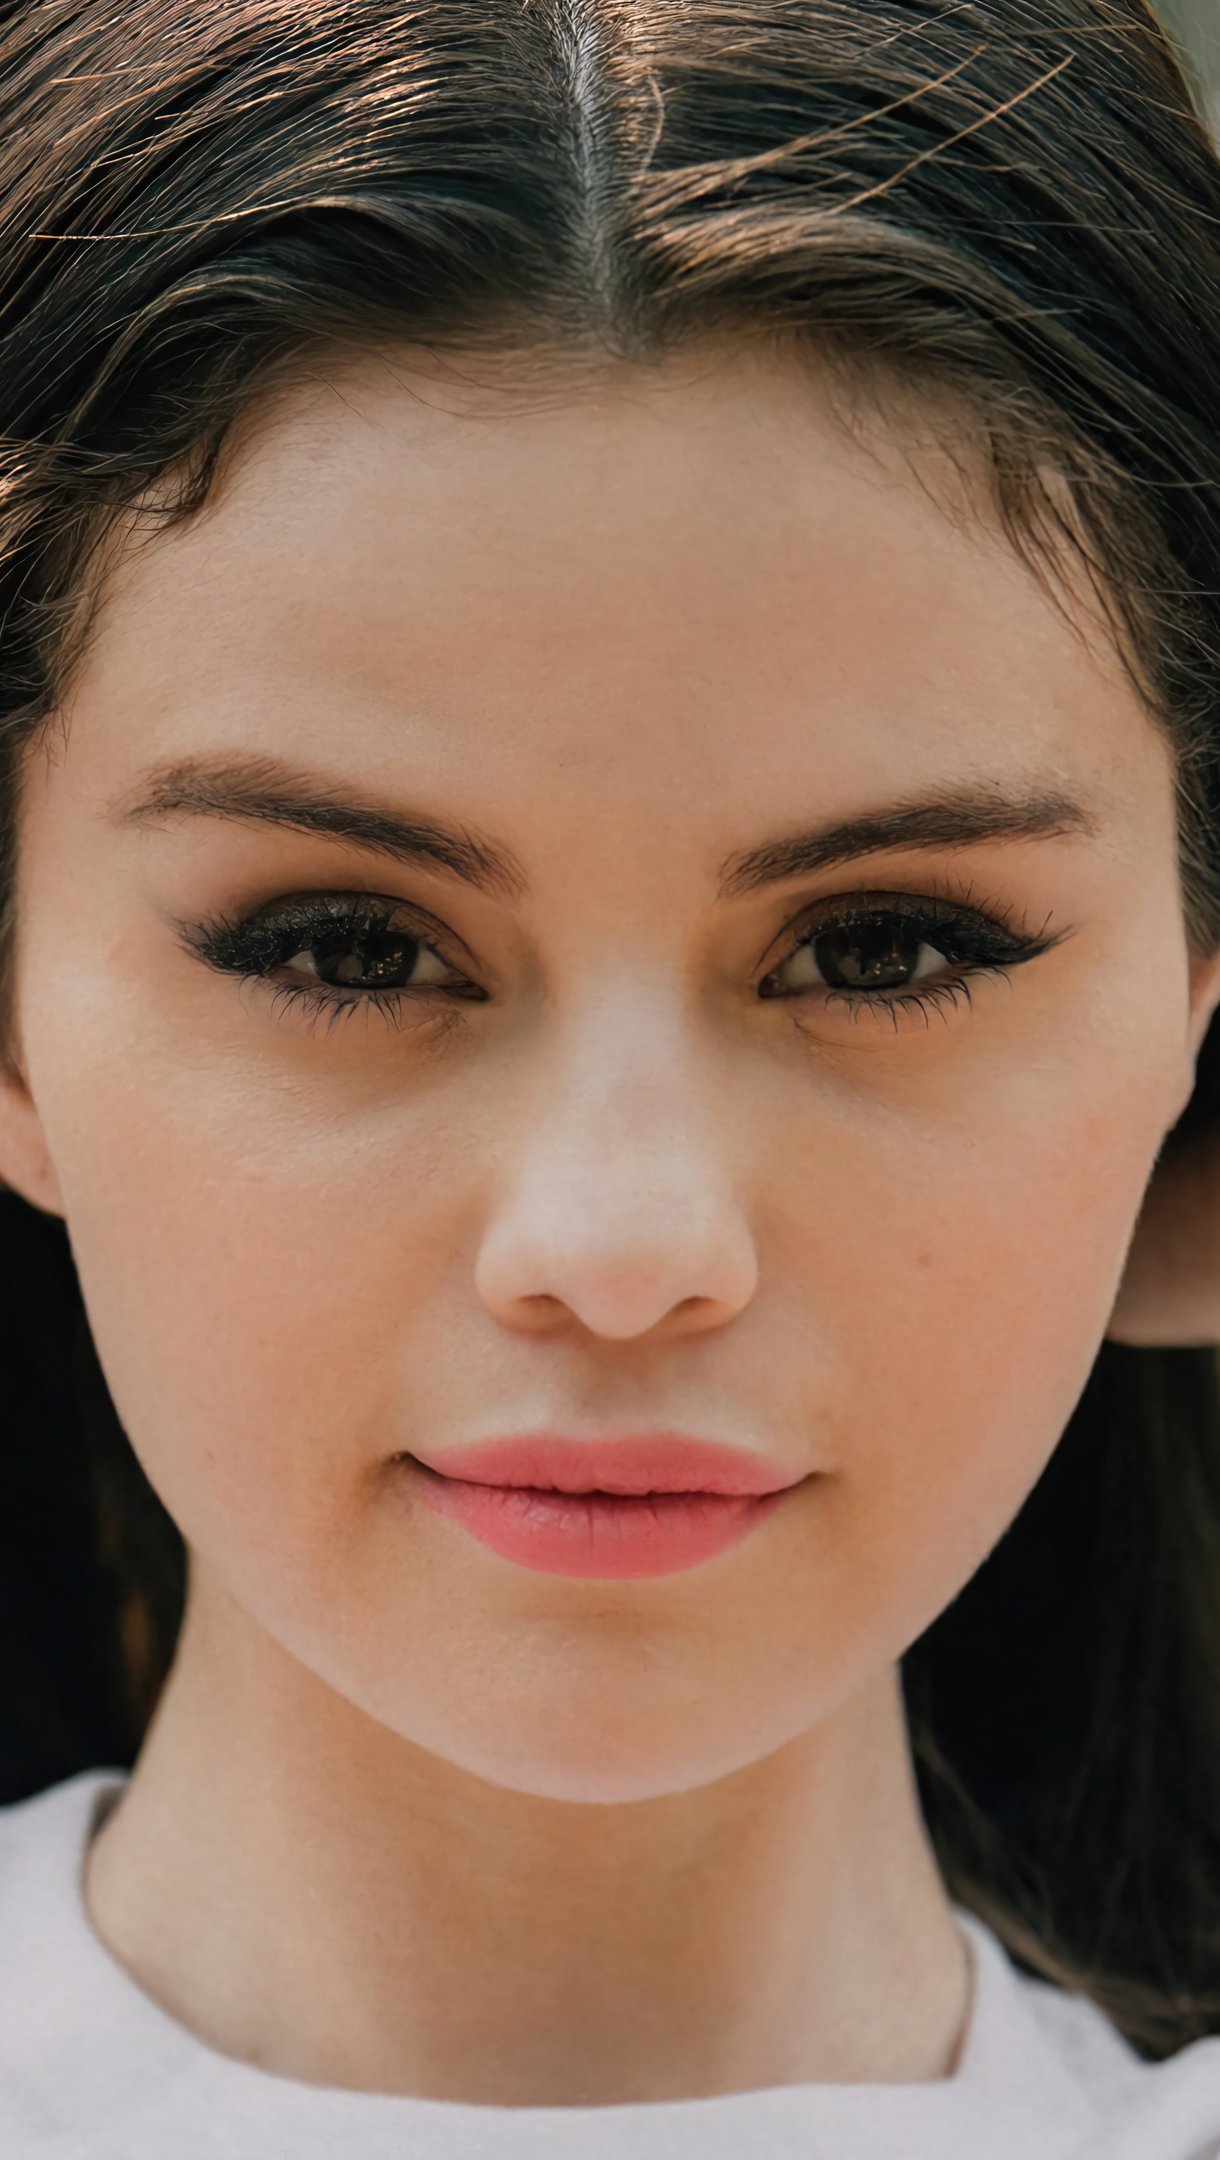 Wallpaper Selena Gomez Face with makeup Vertical